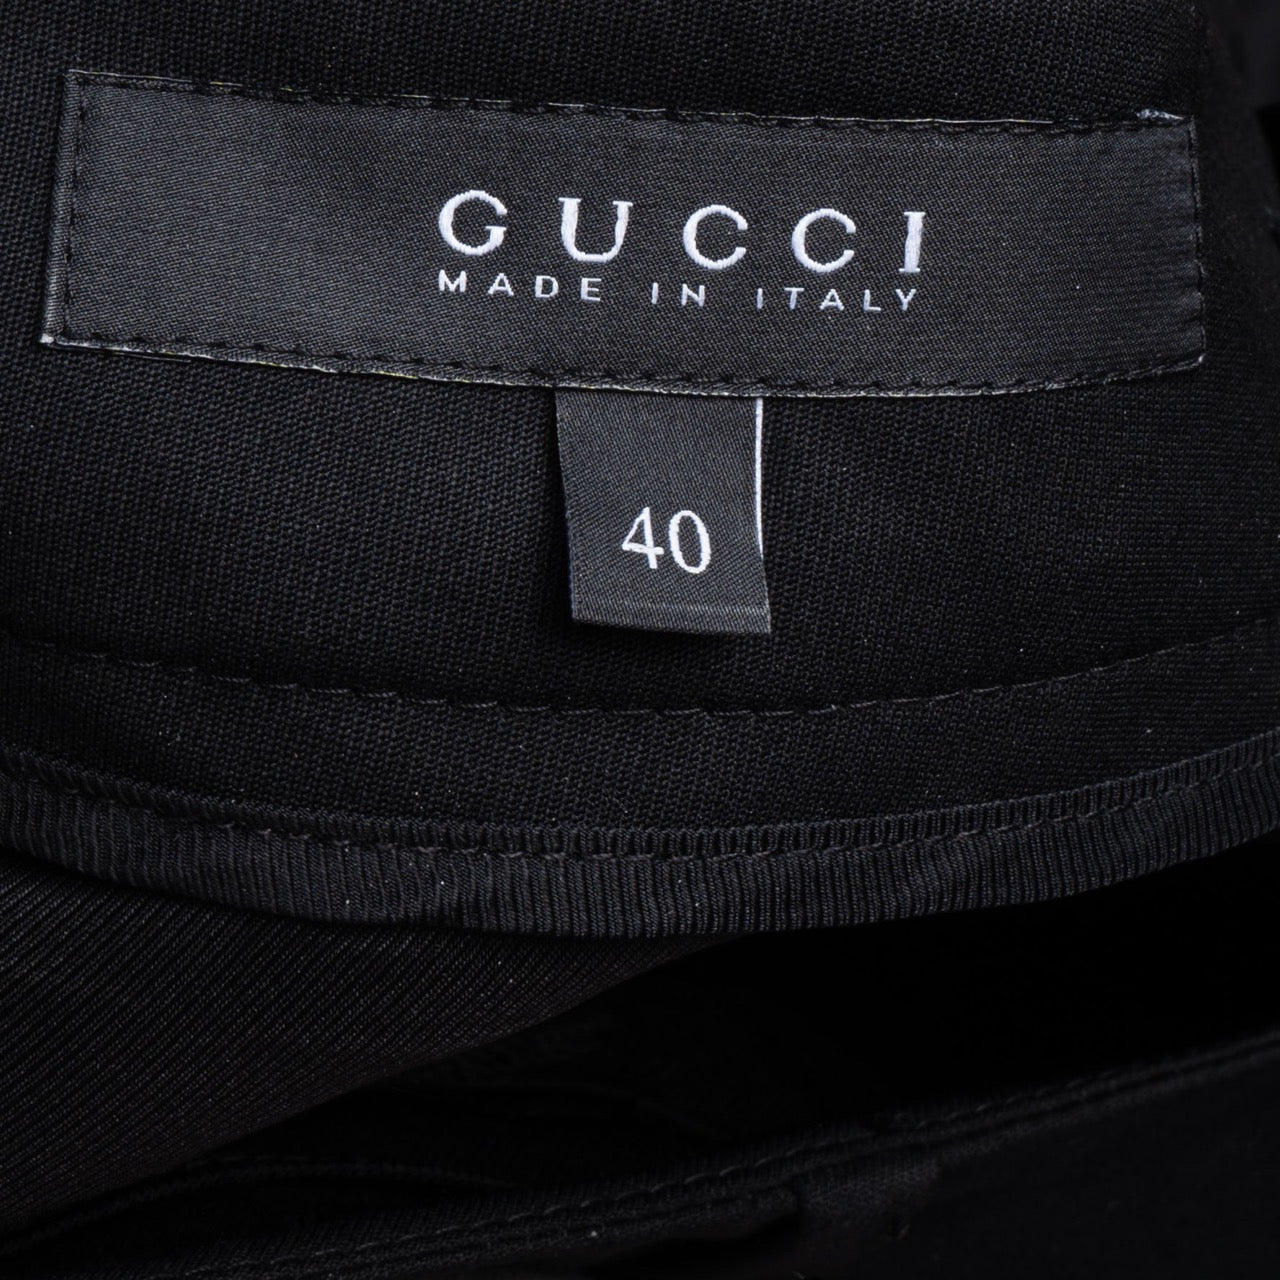 Gucci Golden Buckle Black Wool Pants (40)